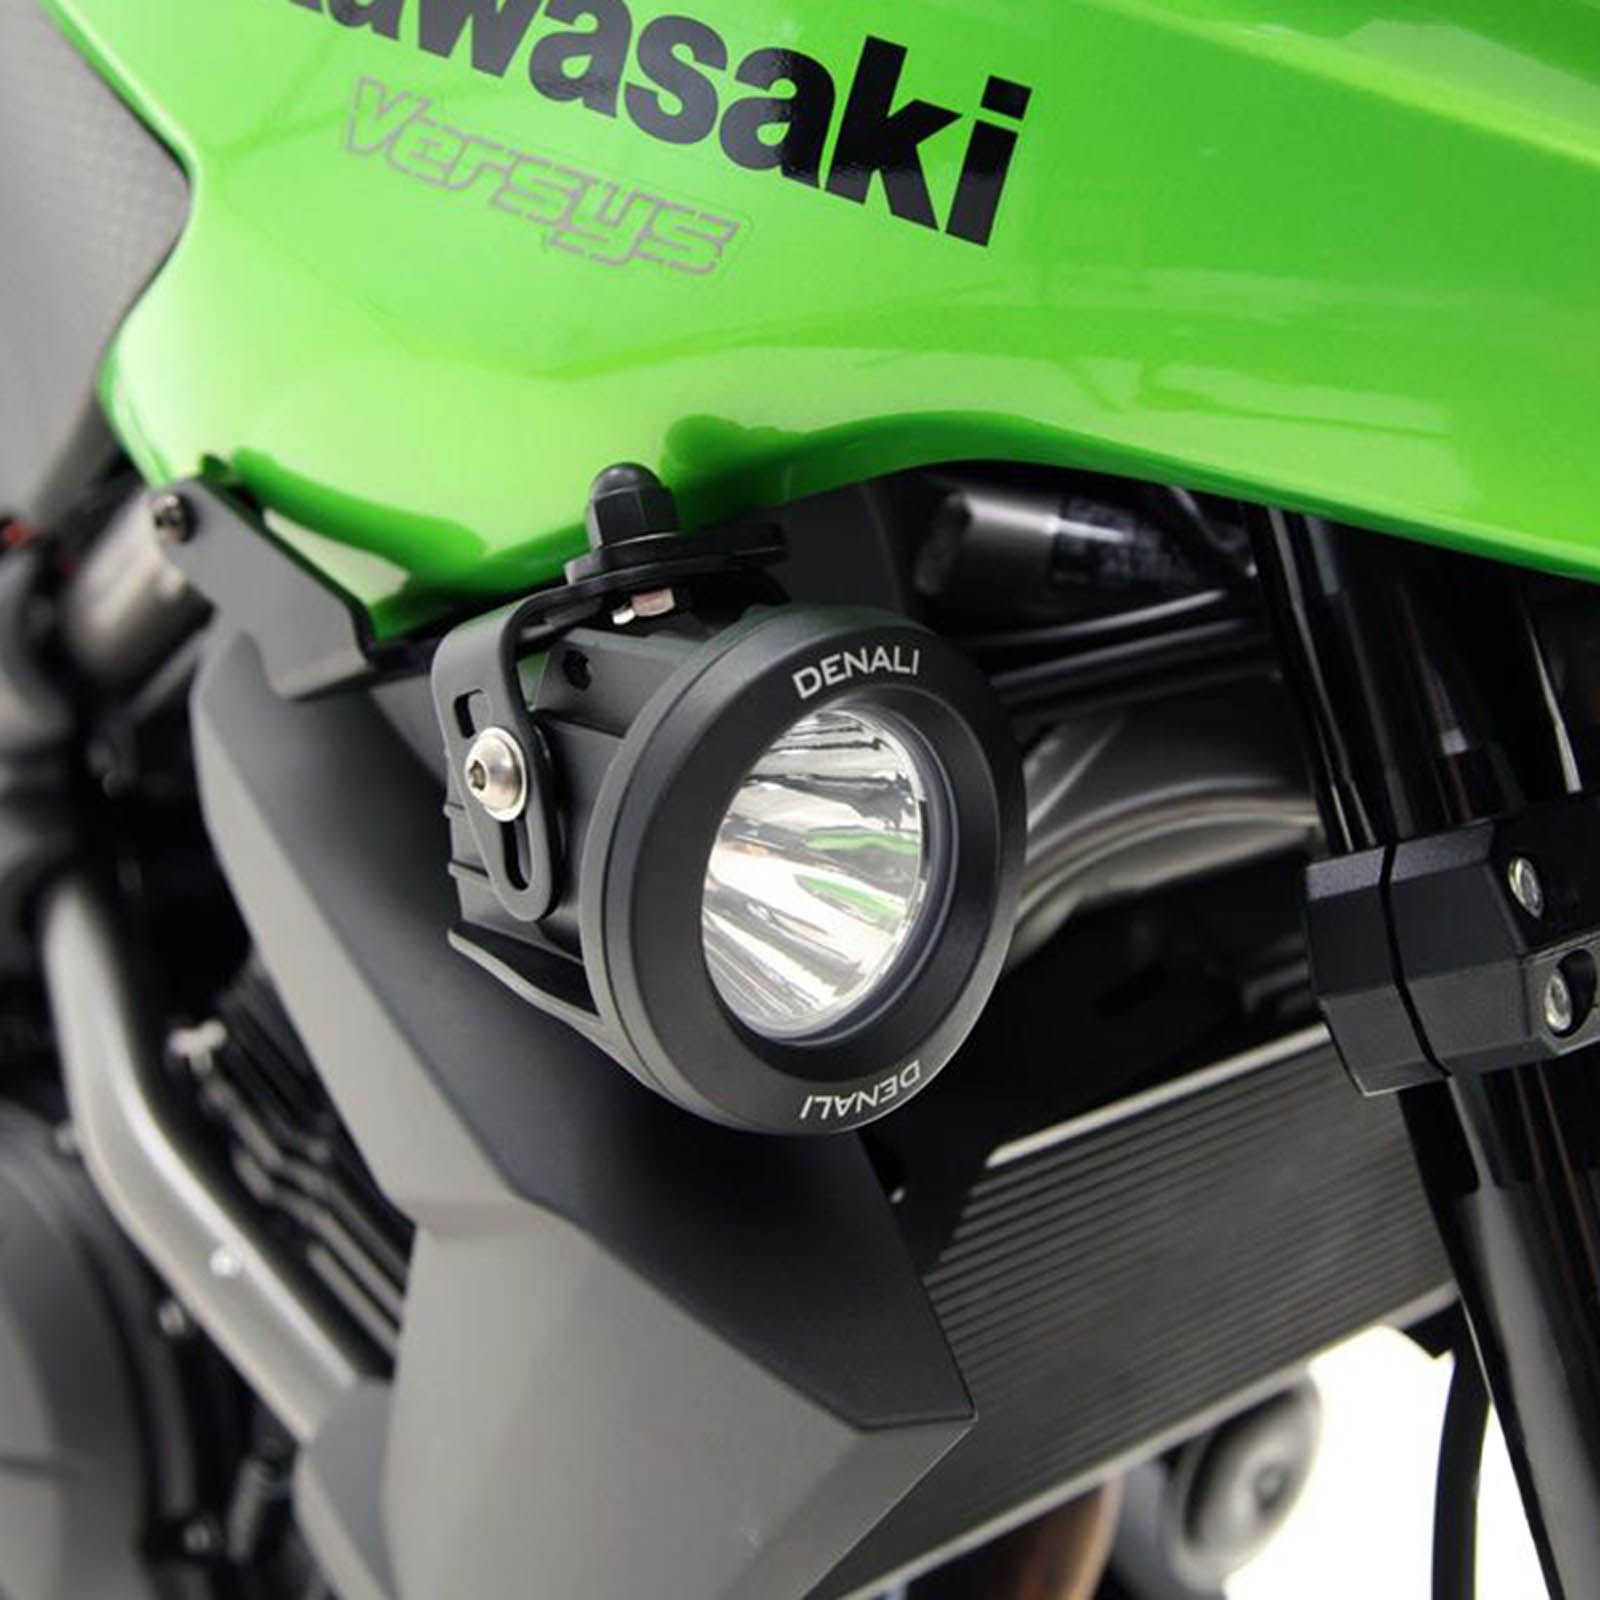 New DENALI Aux Light Mount Bracket For Kawasaki VERSYS 650 '10-'14 #DELAH0810300